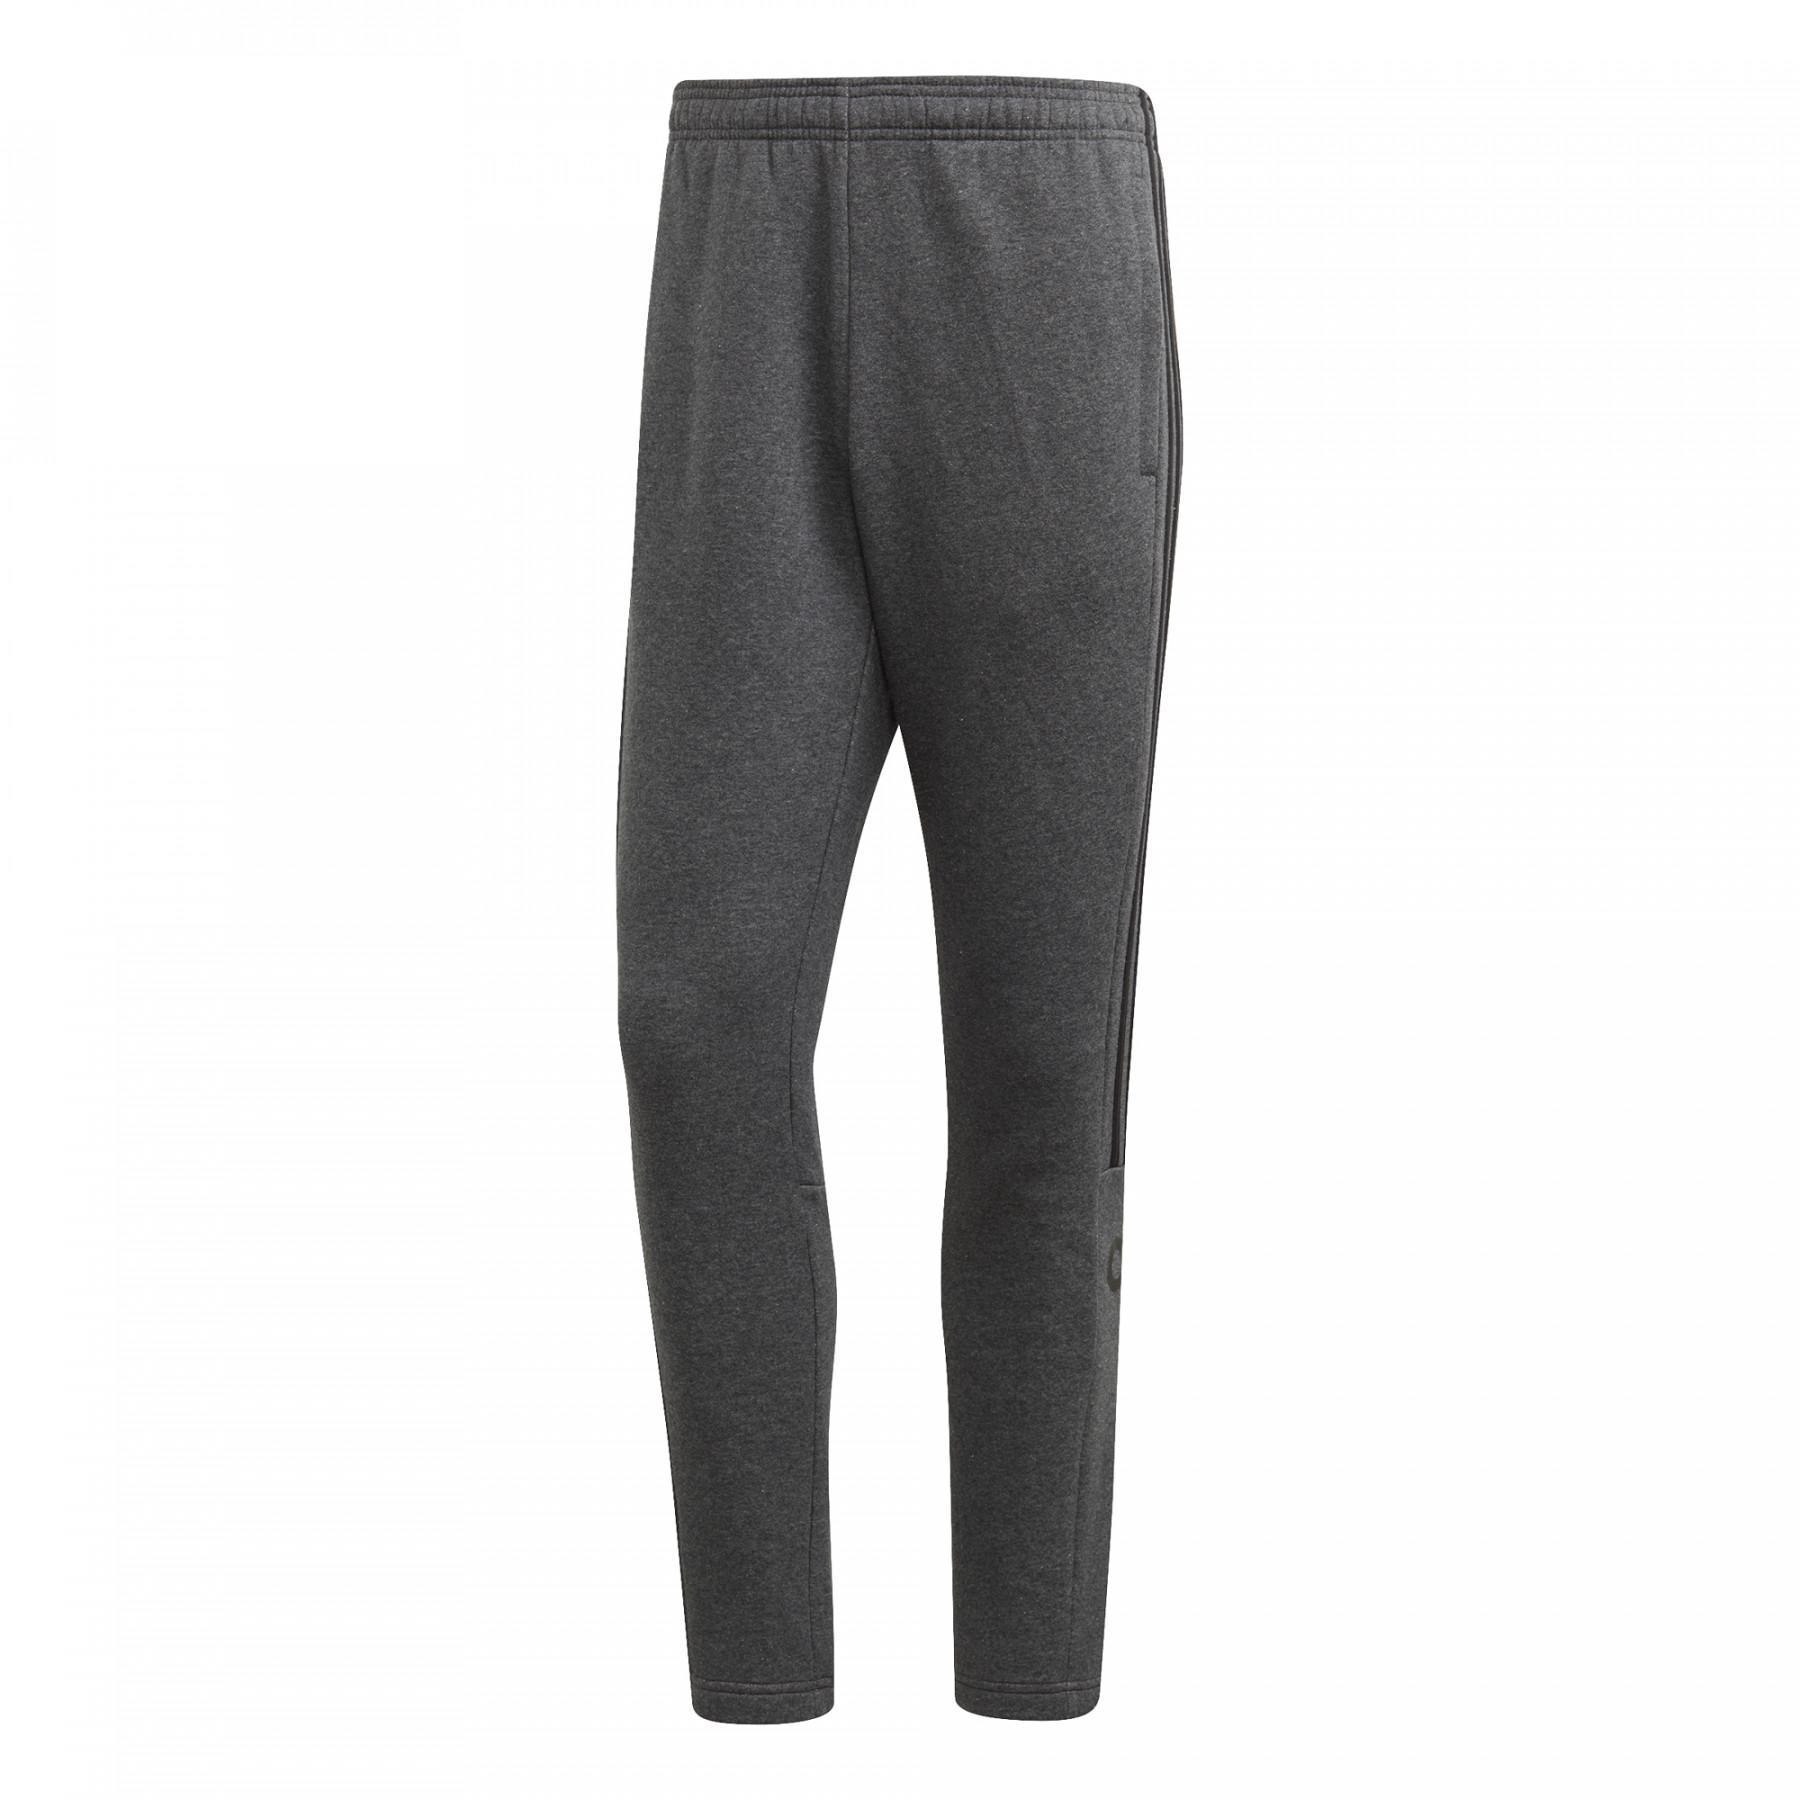 Pantalon jogging adidas 3-Stripes